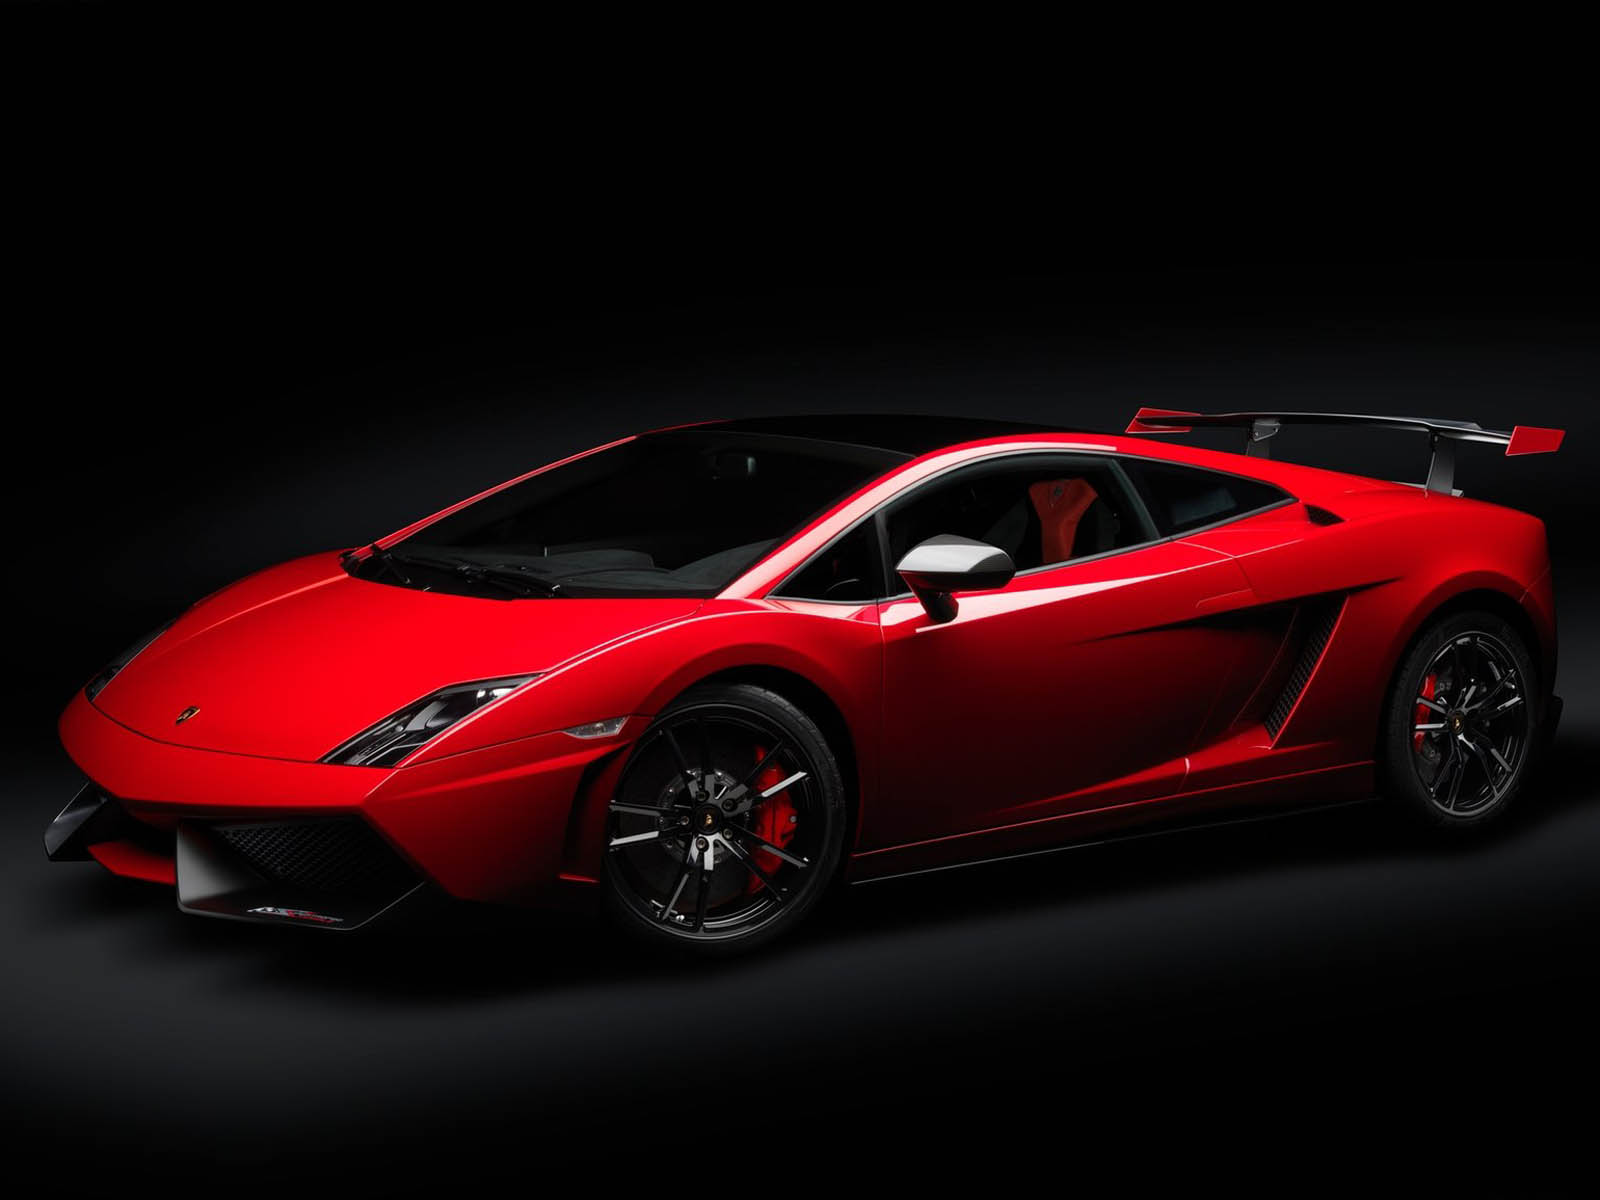 Red Lamborghini Wallpaper HD In Cars Imageci